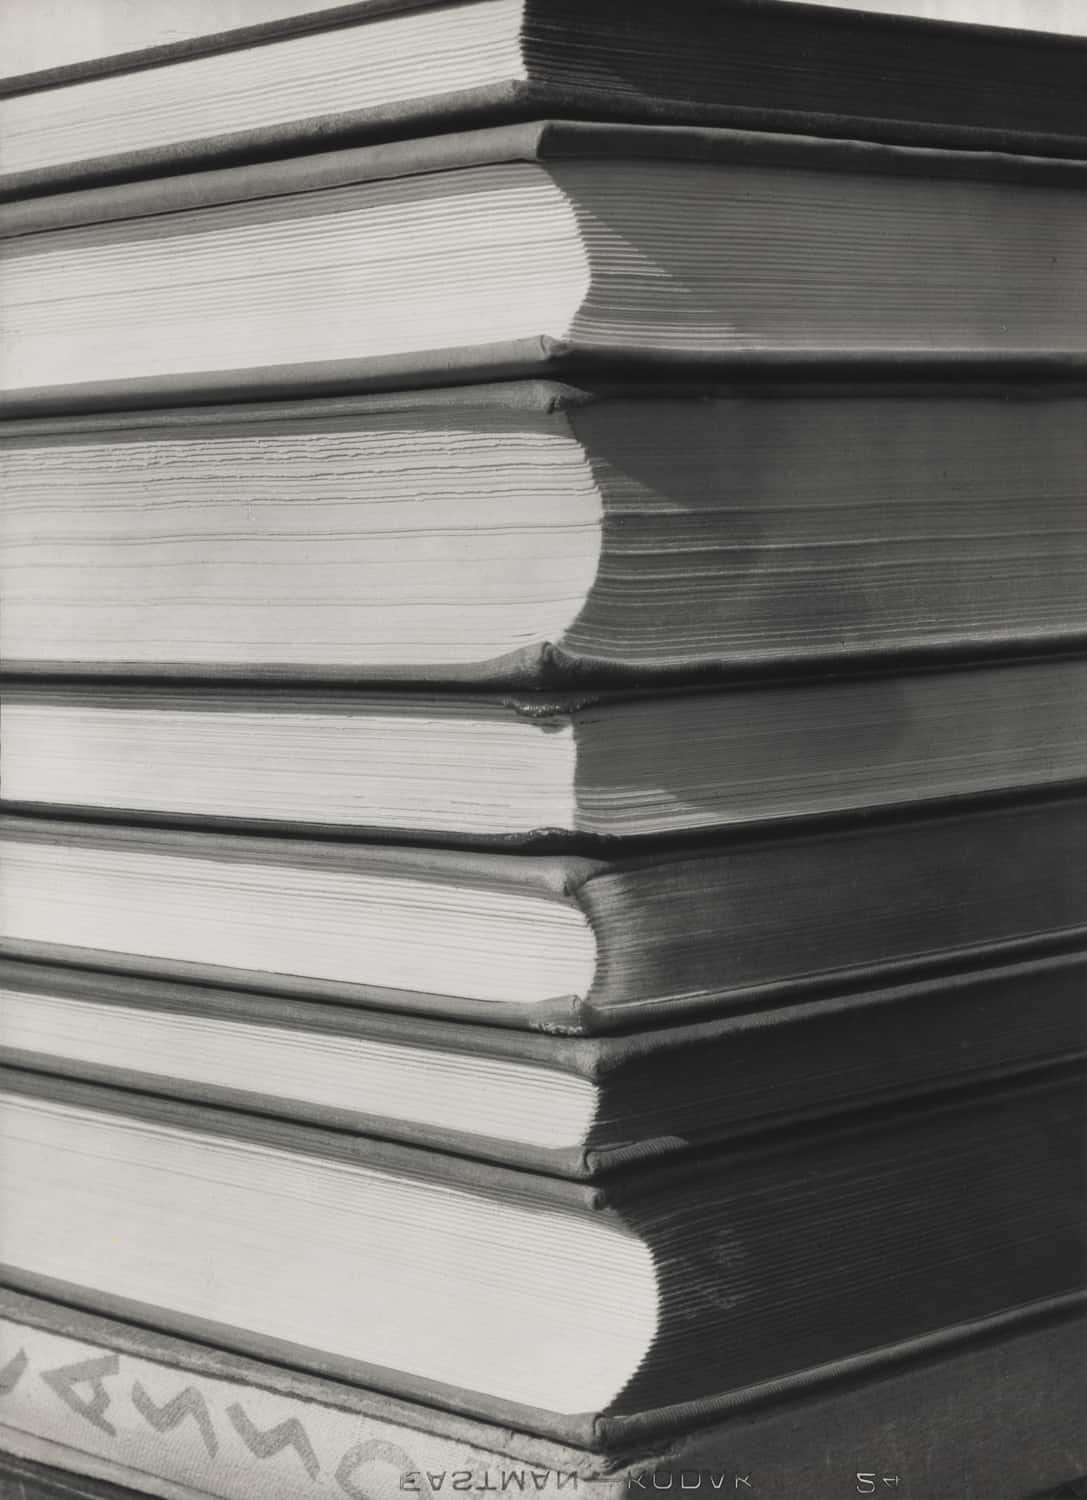 Manuel Álvarez Bravo, Books, 1930. Modern Objects, Huxley-Parlour Gallery, 3–5 Swallow St, London, W1B 4DE.